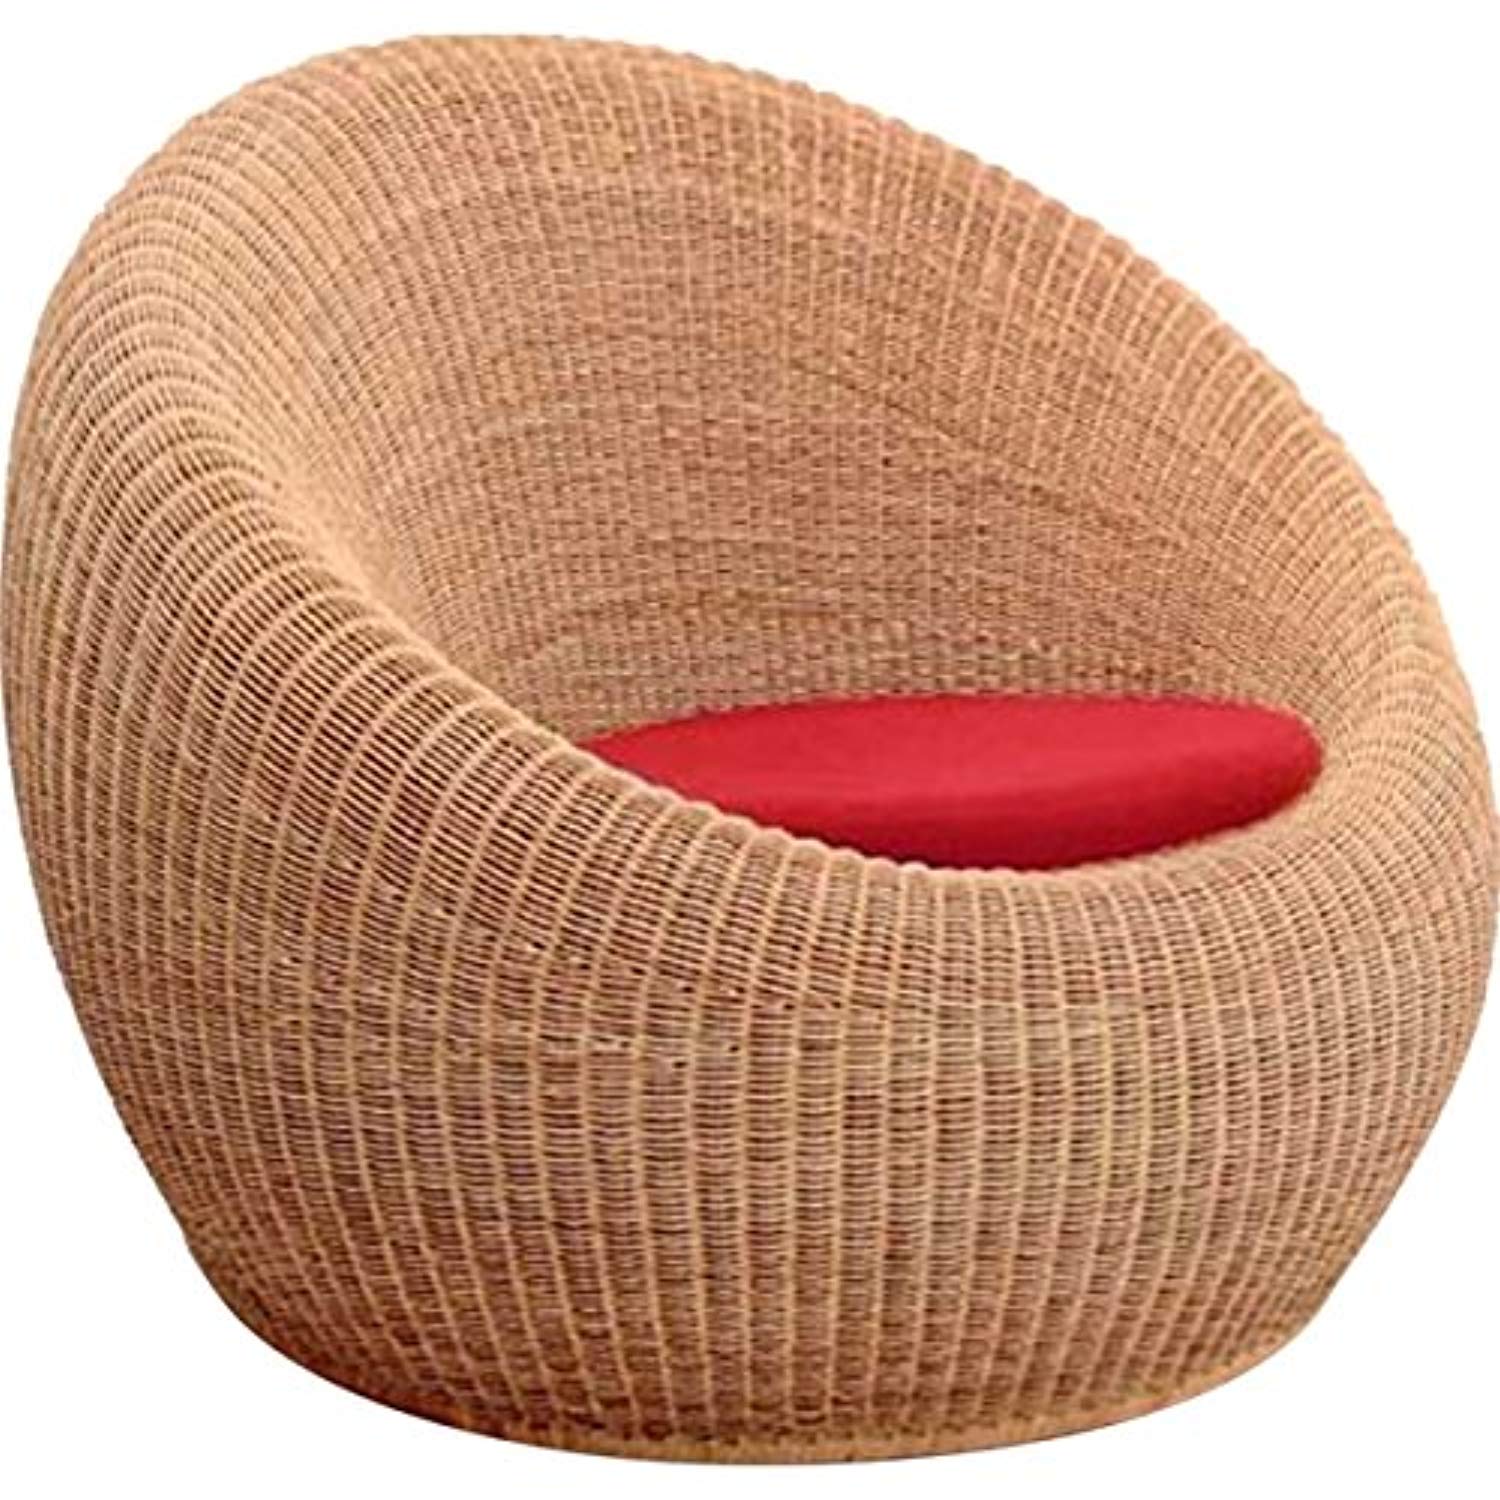 IRA Sofa Chair (Walnut) - IRA Furniture